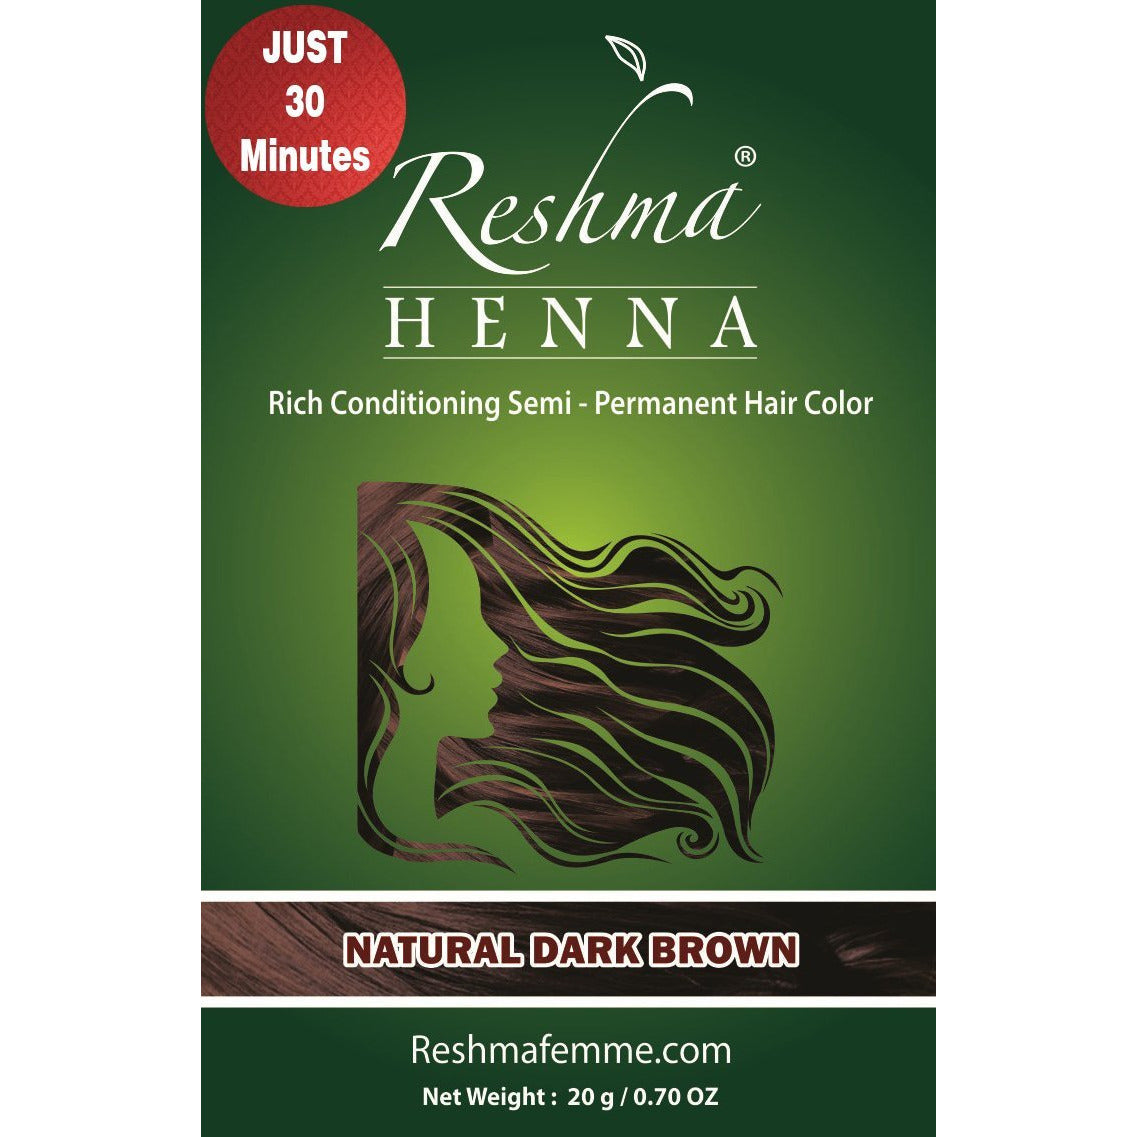 4th Ave Market: Reshma Beauty Henna Powder Rich Conditioning Semi-Permanent Hair Color - Natural Dar